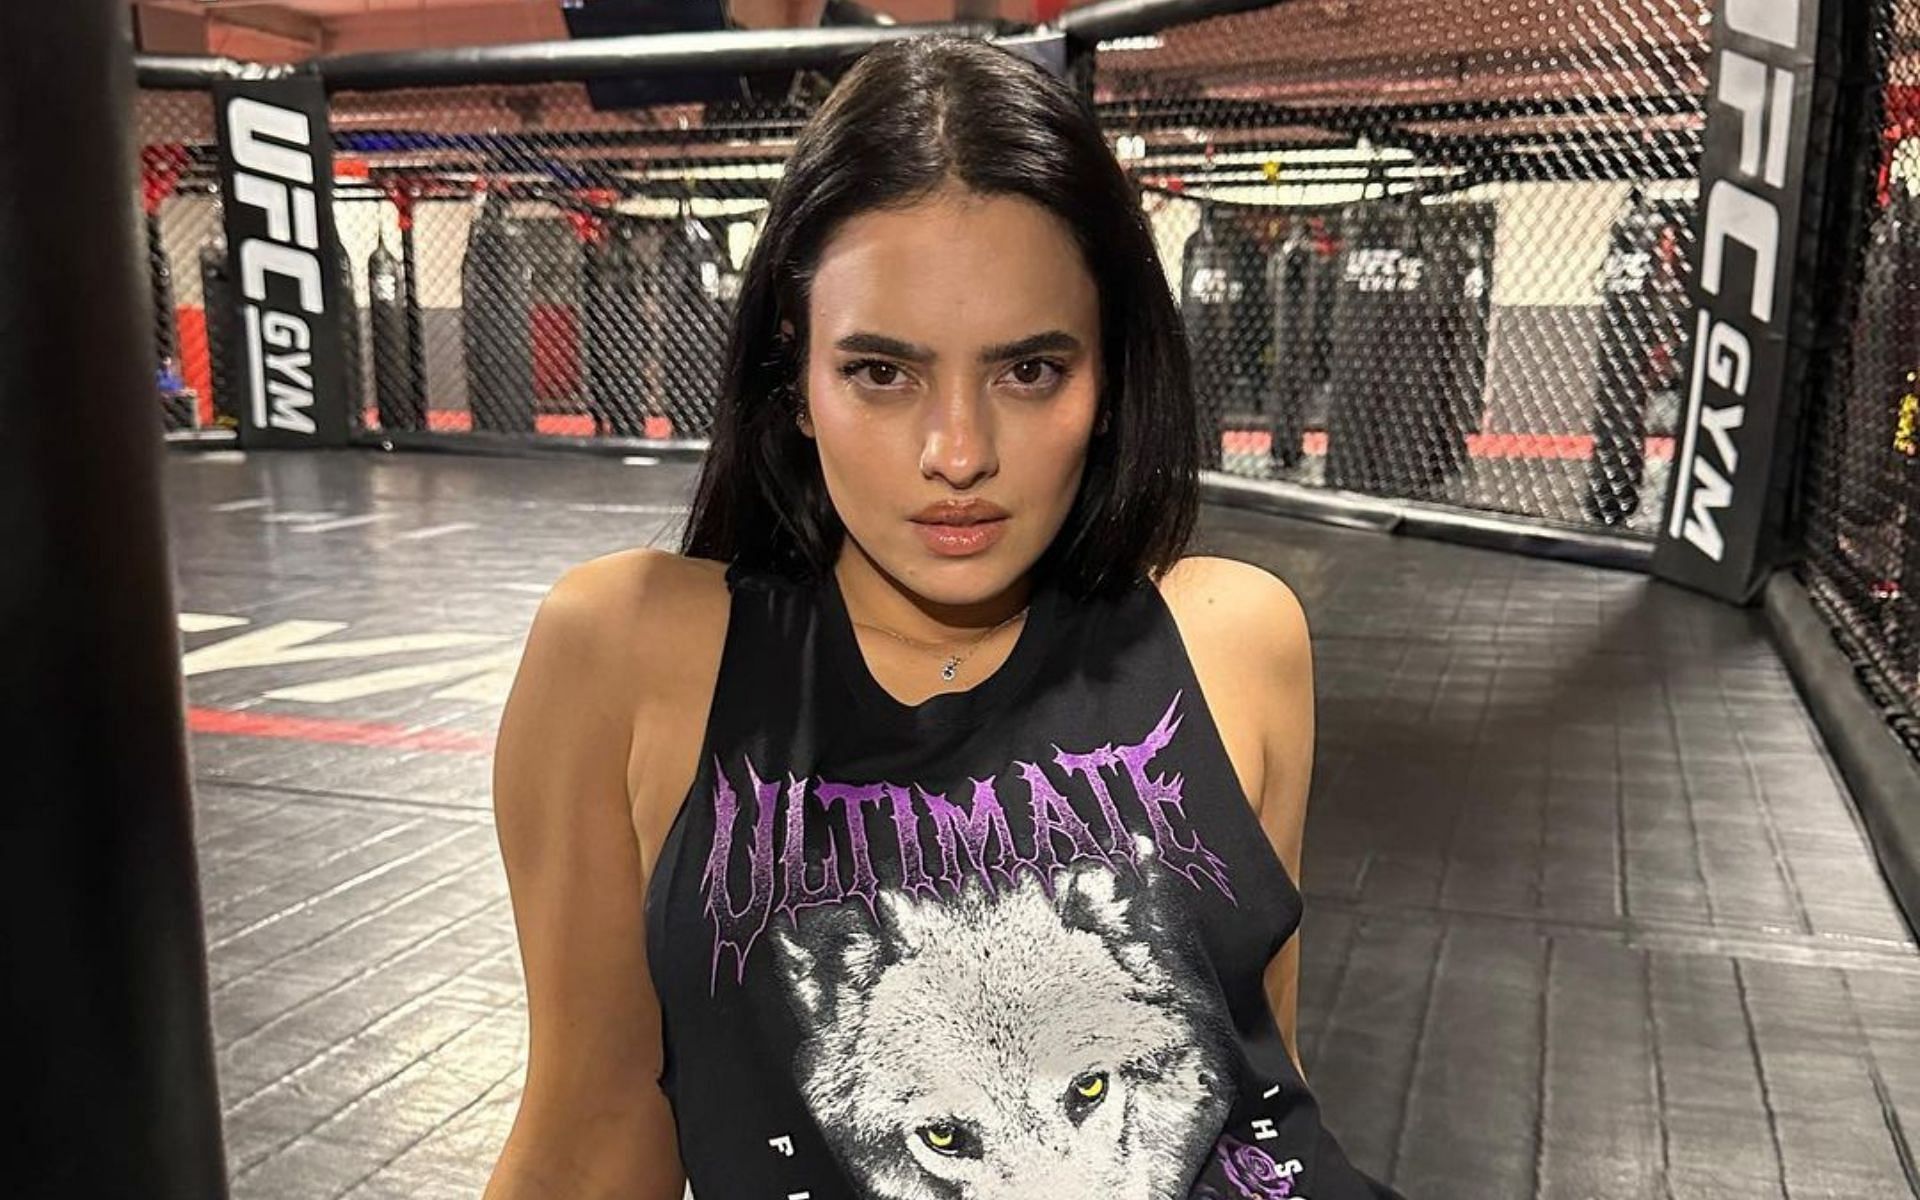 MMA influencer Nina-Marie Daniele [Image credits: @ninamariedaniele on Instagram]